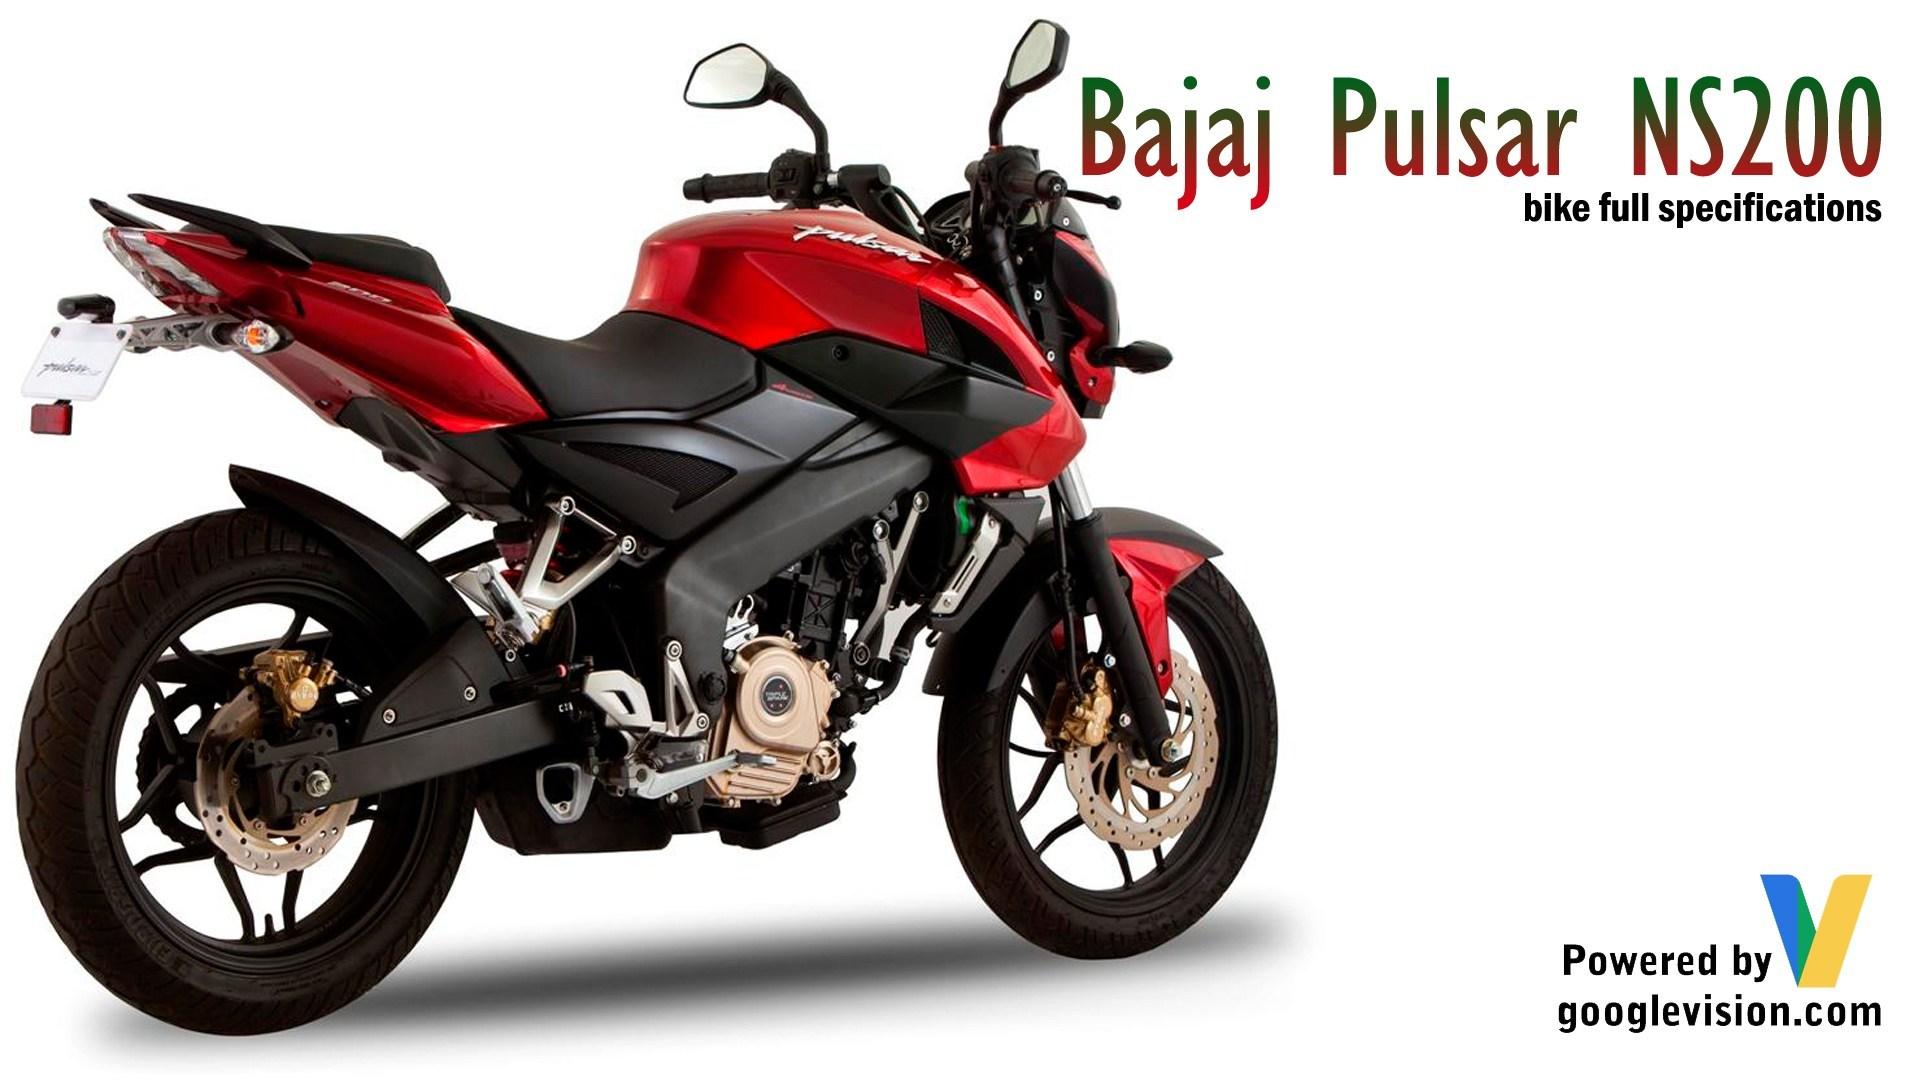 Bajaj Pulsar NS200 full specifications & price